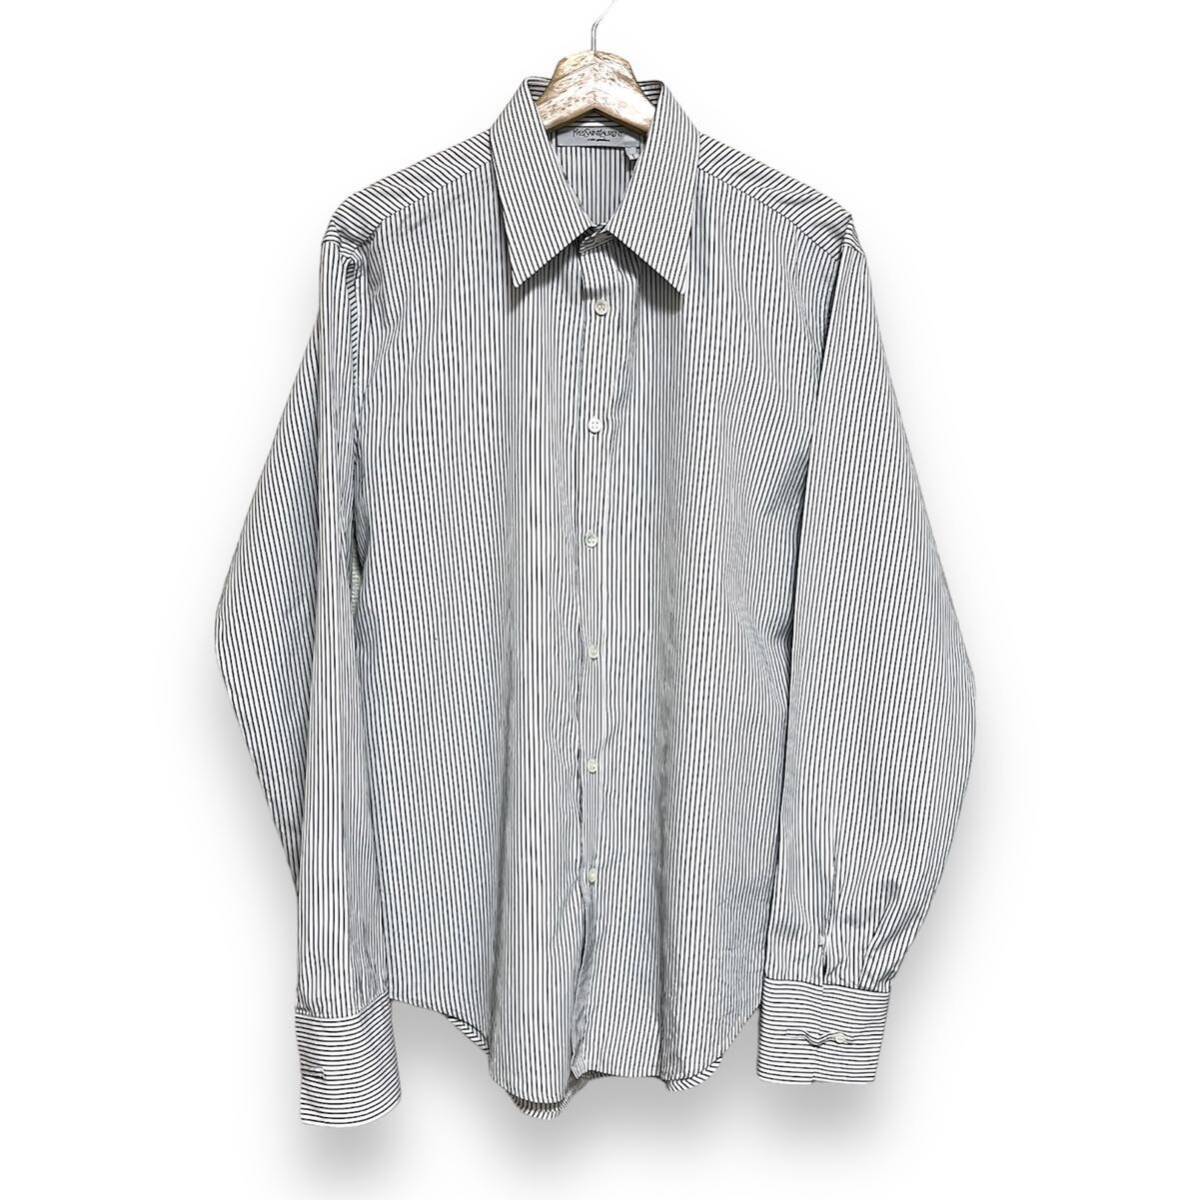 Yves Saint Laurent rive gauche stripe shirt イヴ・サンローラン リヴゴーシュ ストライプシャツ 白 グレー イタリア製 16 1/2の画像1